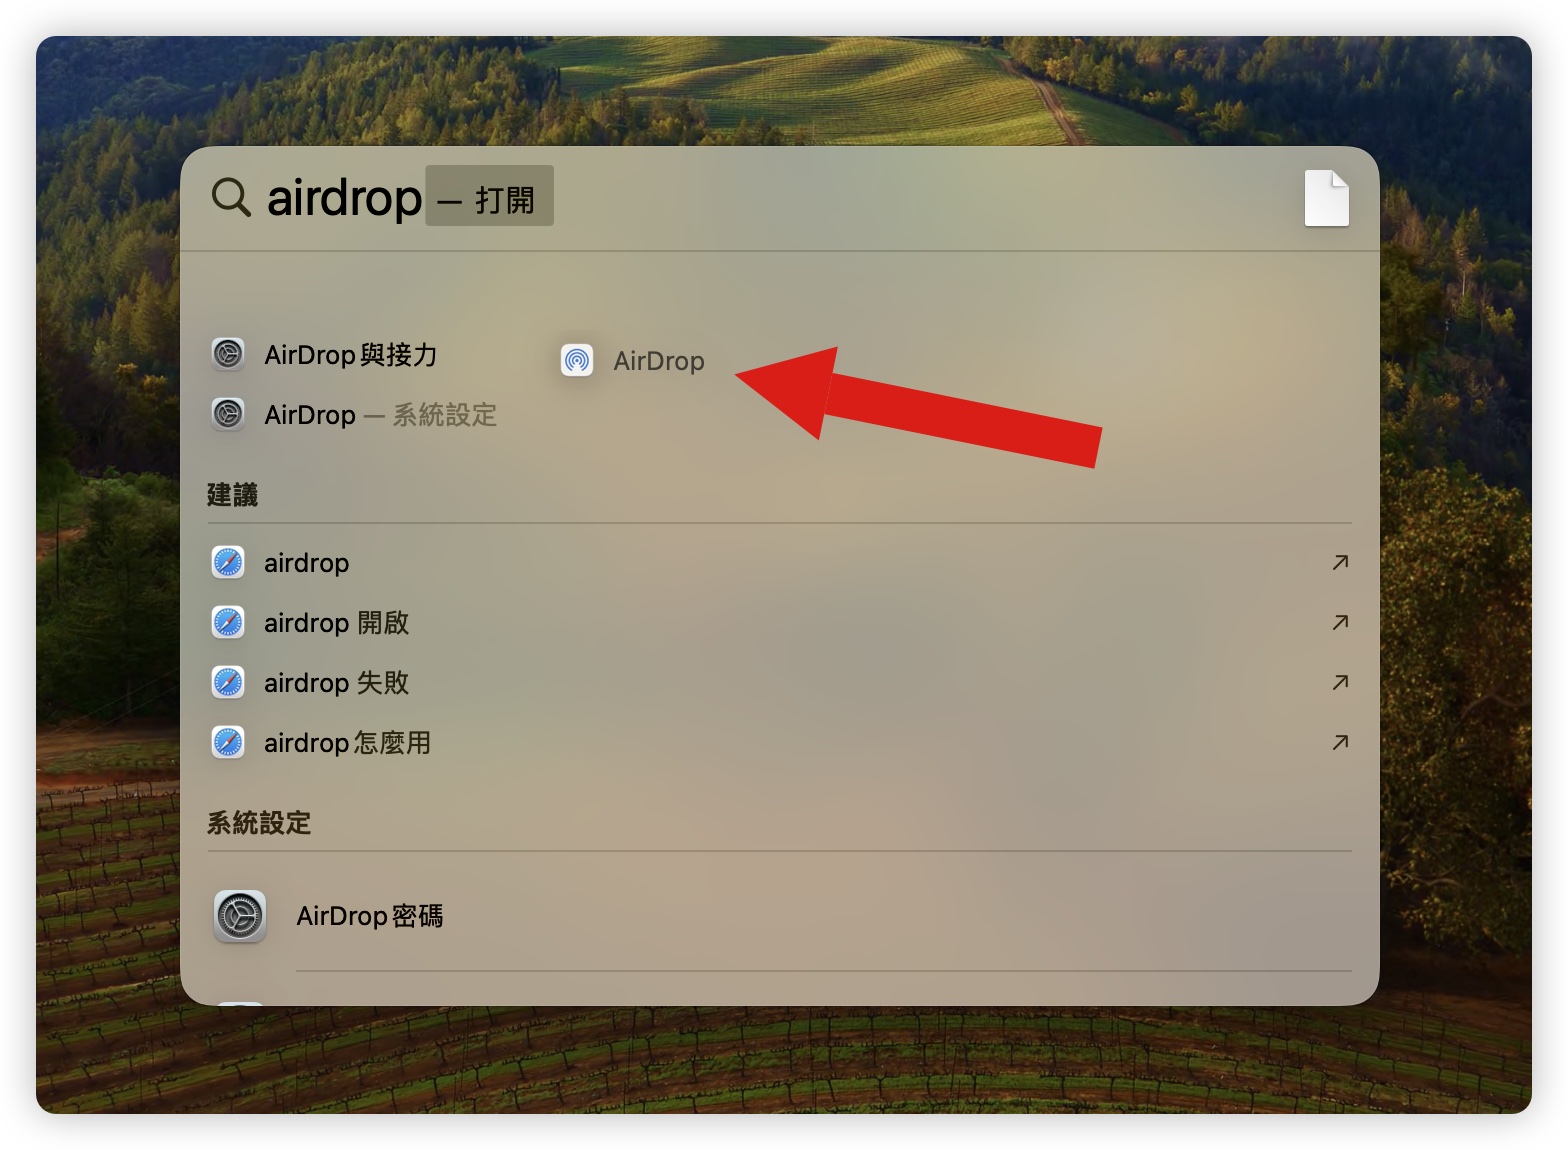 Mac AirDrop 快速啟用 快速使用 技巧